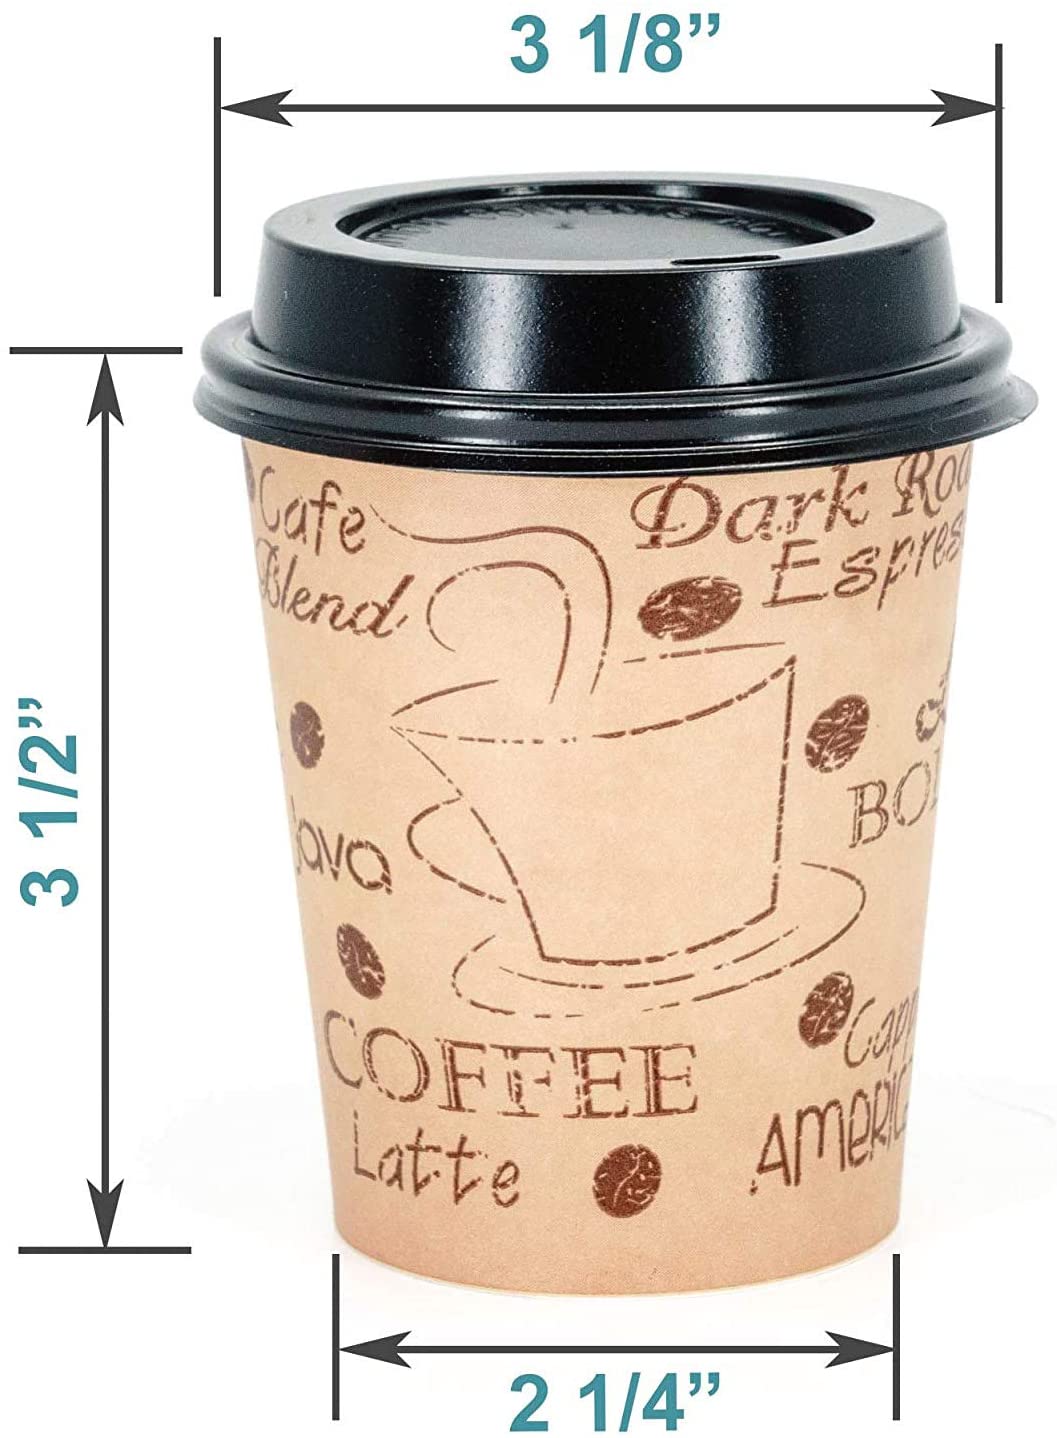 Heated Espresso-Sized Coffee Cups : heated espresso cup